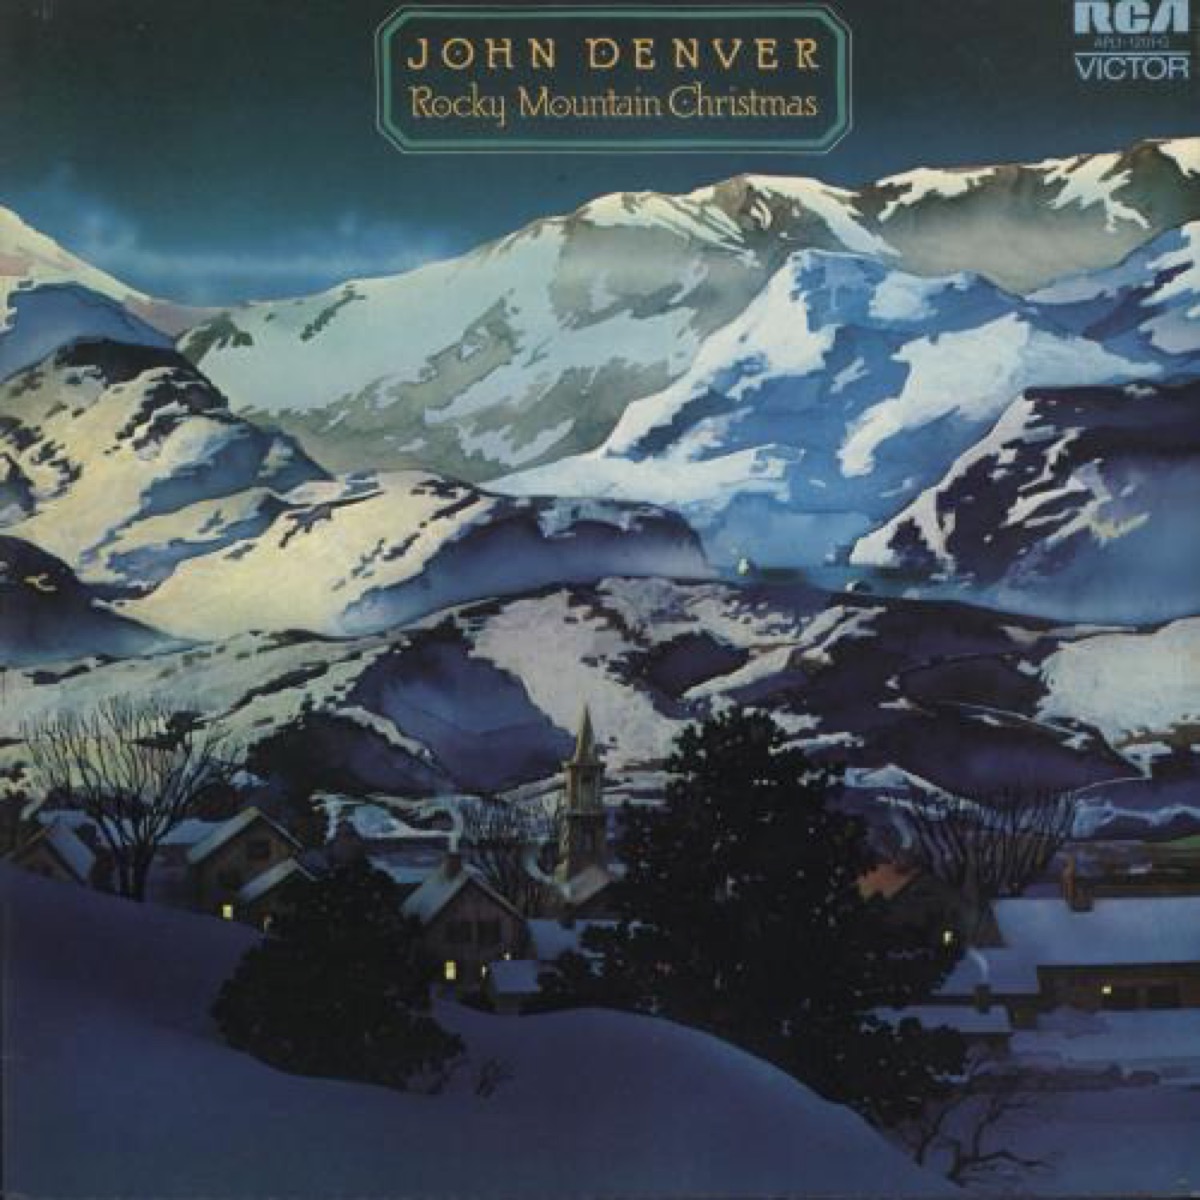 john denver rocky mountain christmas album cover